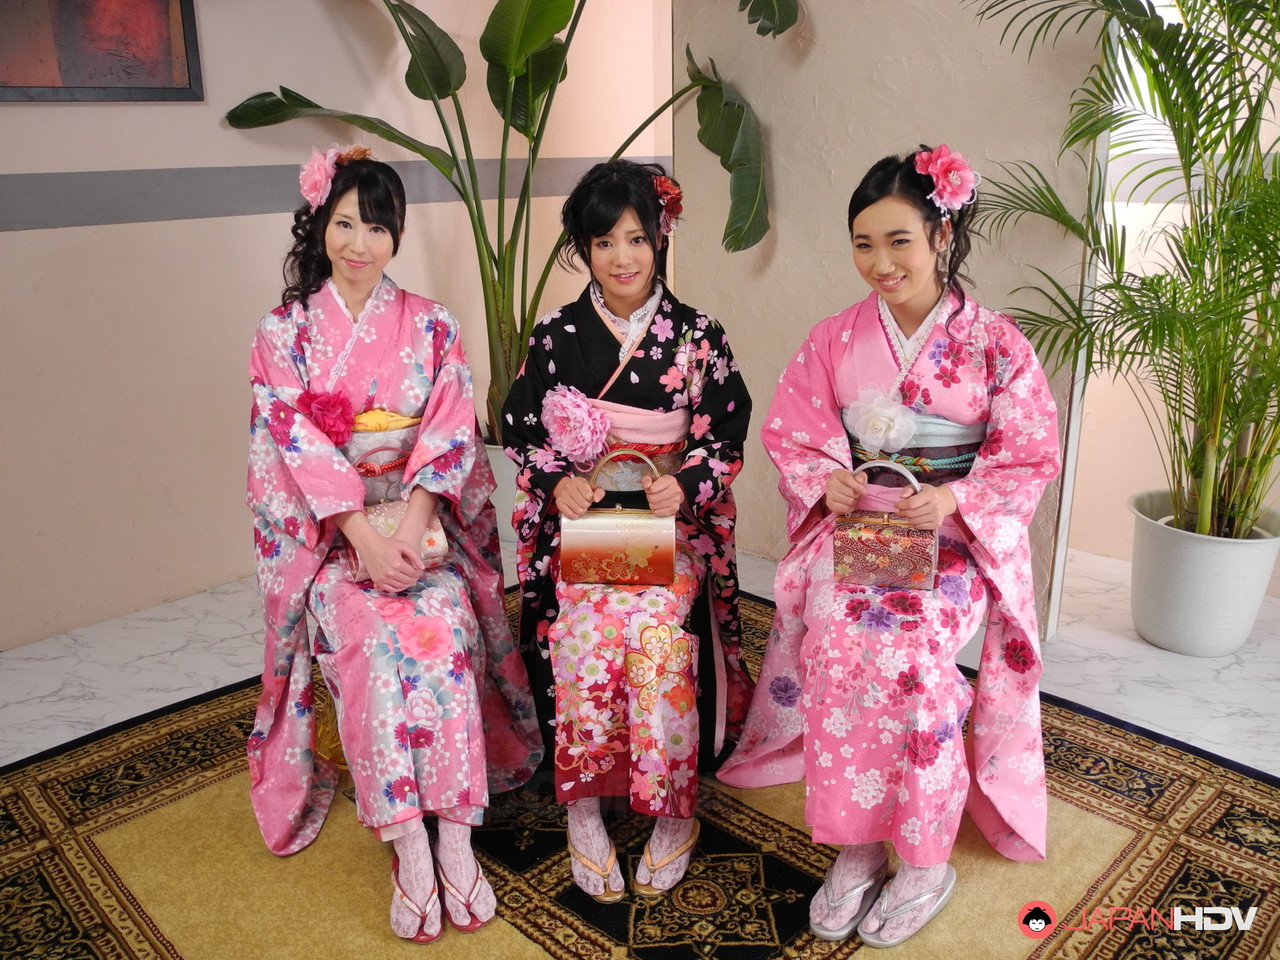 Sexy Asian girl Hina & her friends suck a dick wearing traditional Asian robes foto porno #424210118 | Japan HDV Pics, Hina, Sanae Momoi, Uta Kohaku, CFNM, porno mobile